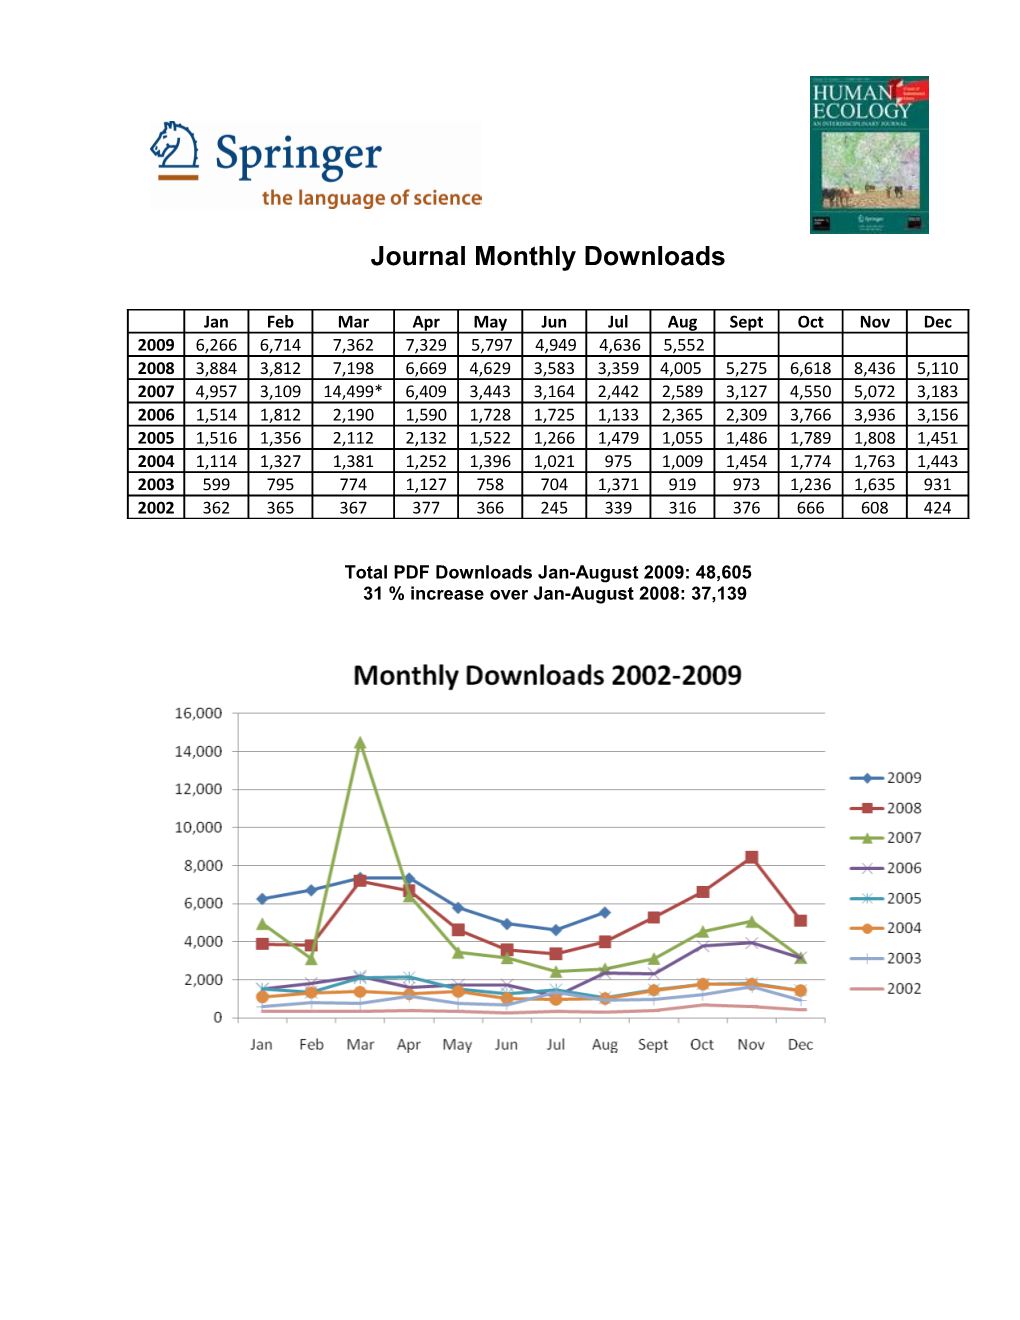 Total PDF Downloads Jan-August 2009: 48,605